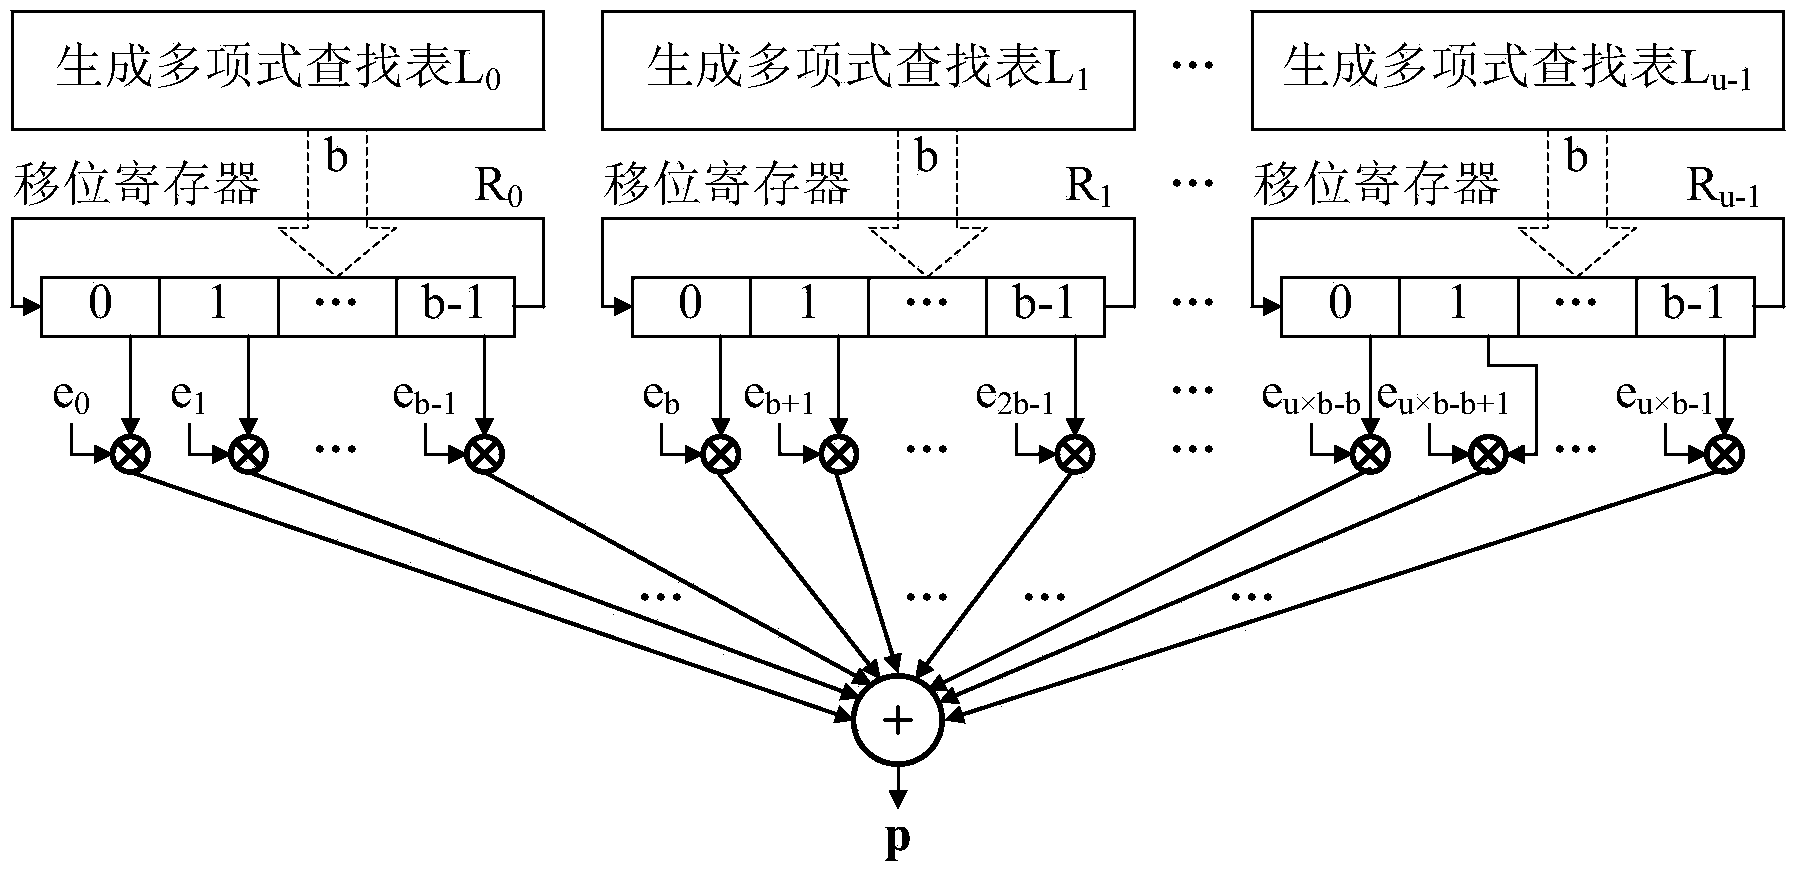 Full parallel input quasi-cyclic matrix multiplier based on ring shift left in CMMB